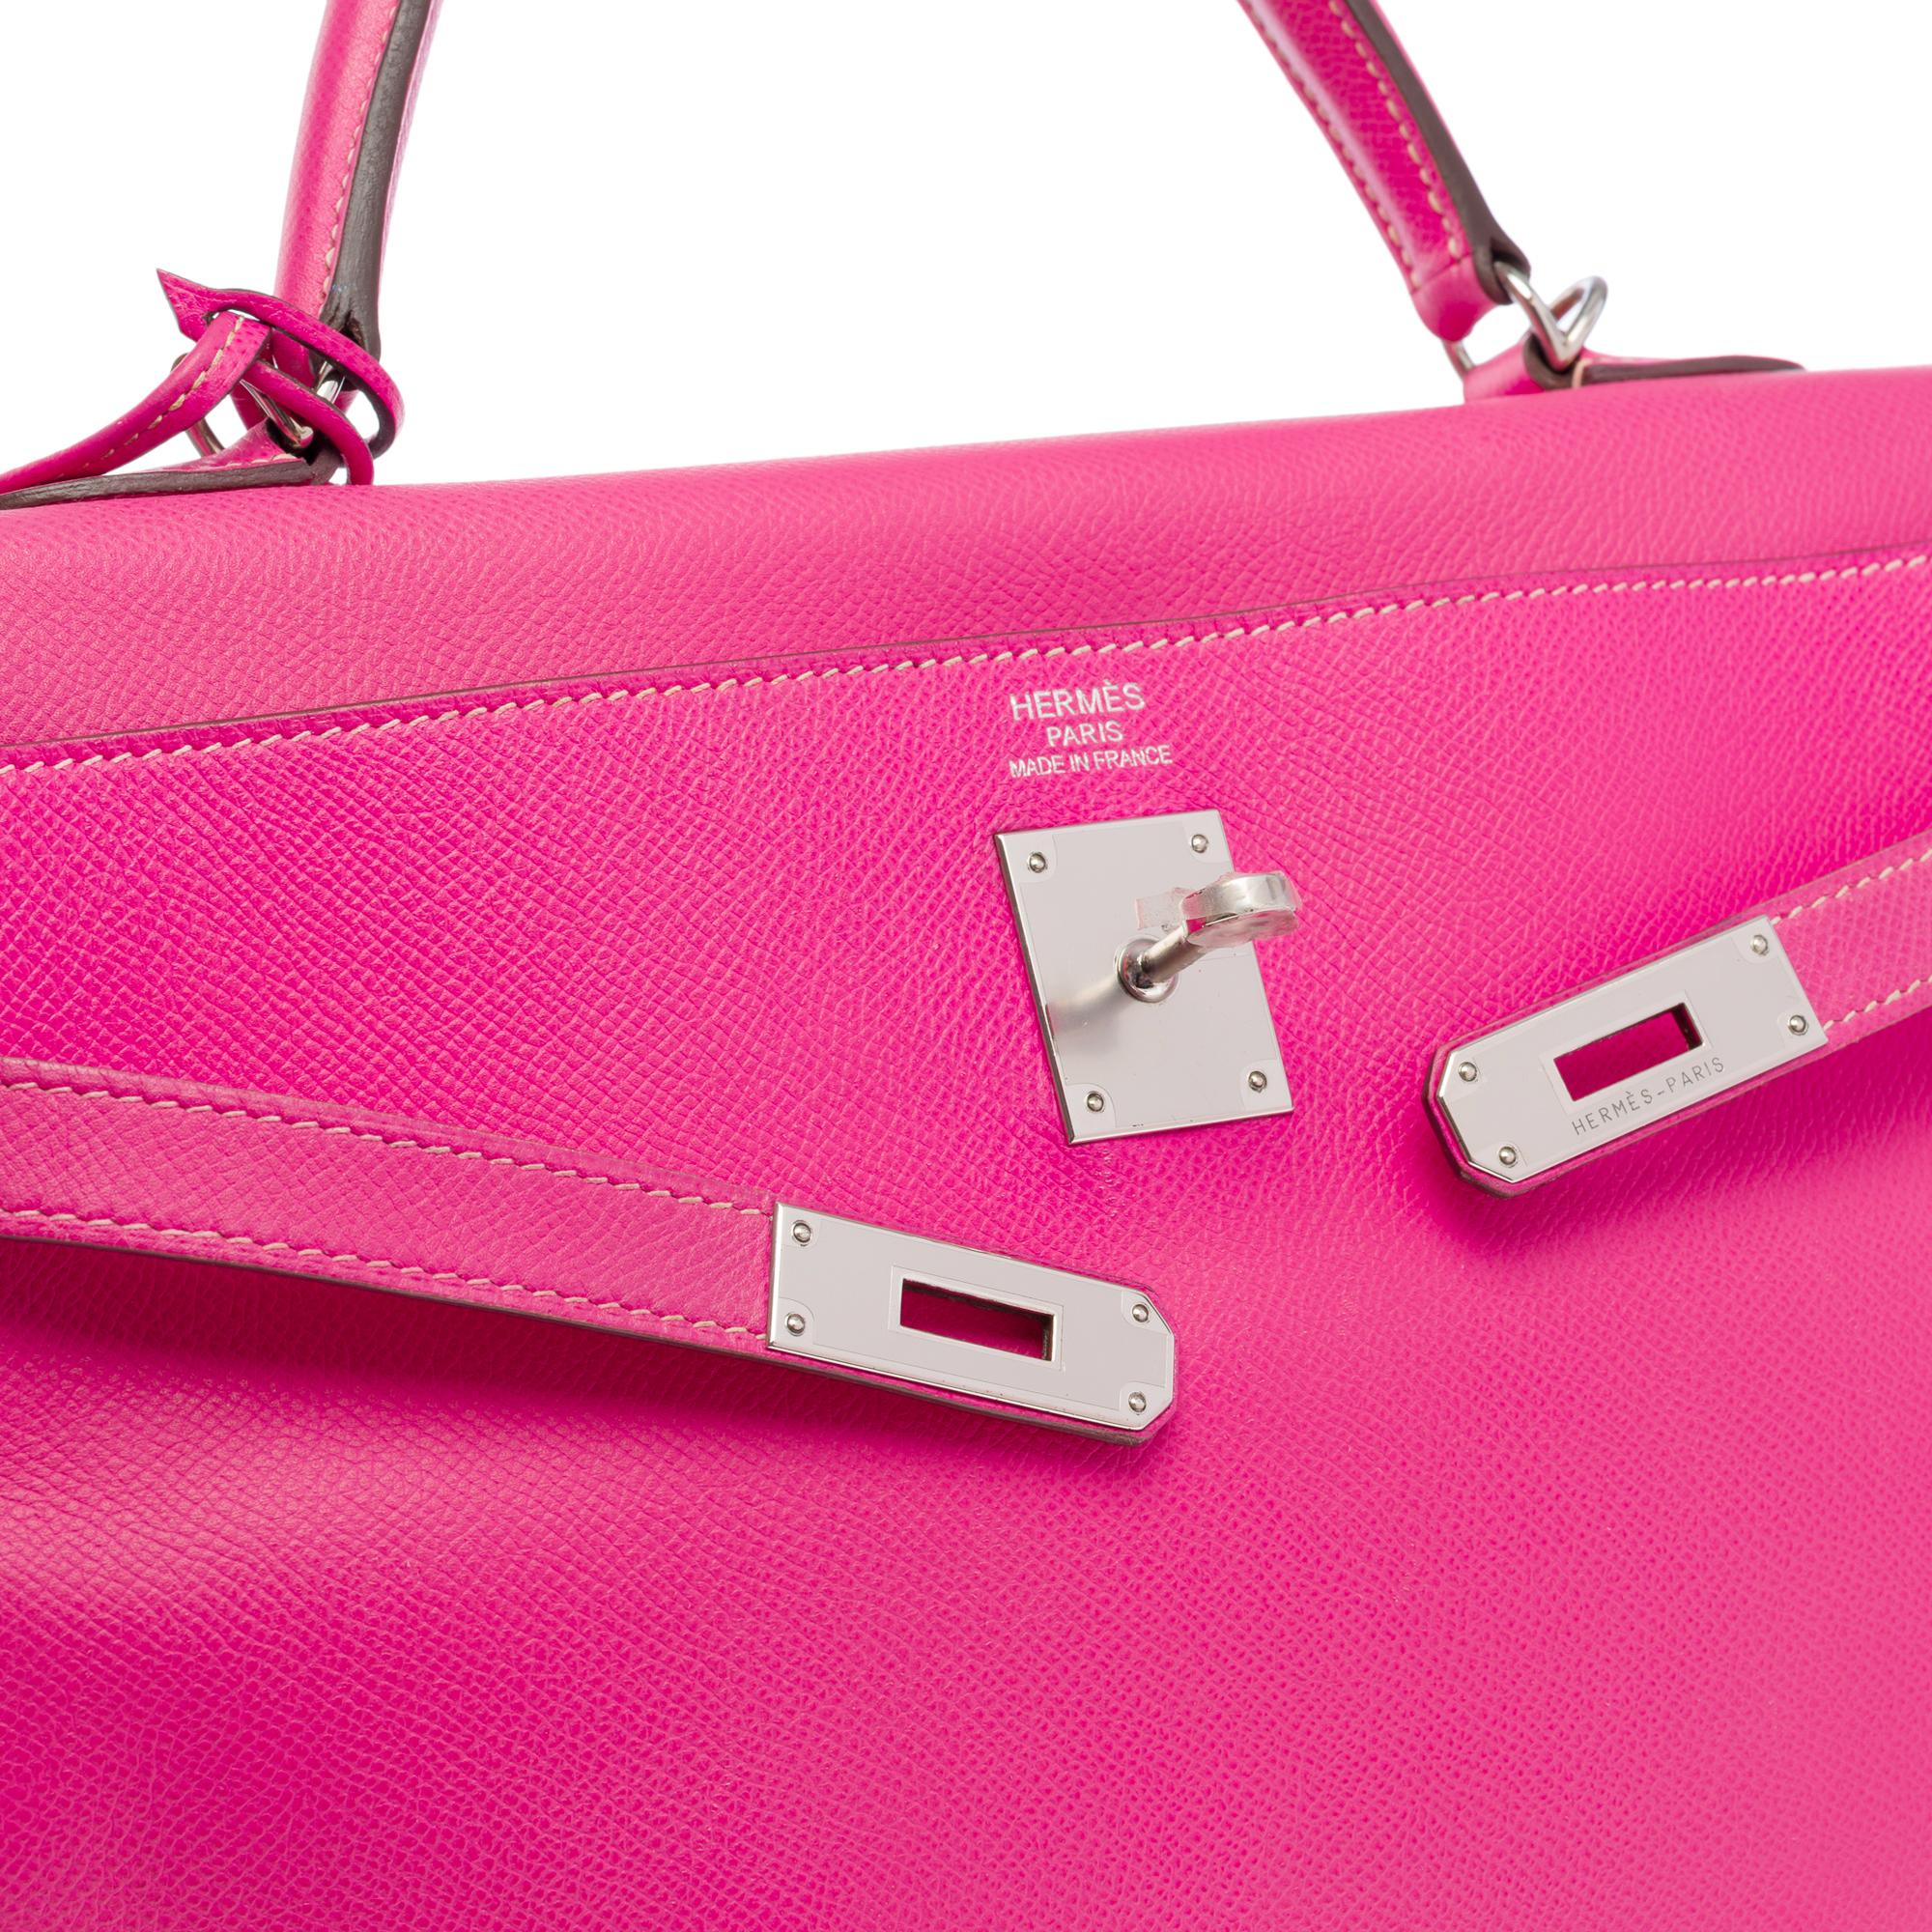 Candy Edition Hermès Kelly 35 retourne handbag strap in Pink Epsom leather, SHW 1